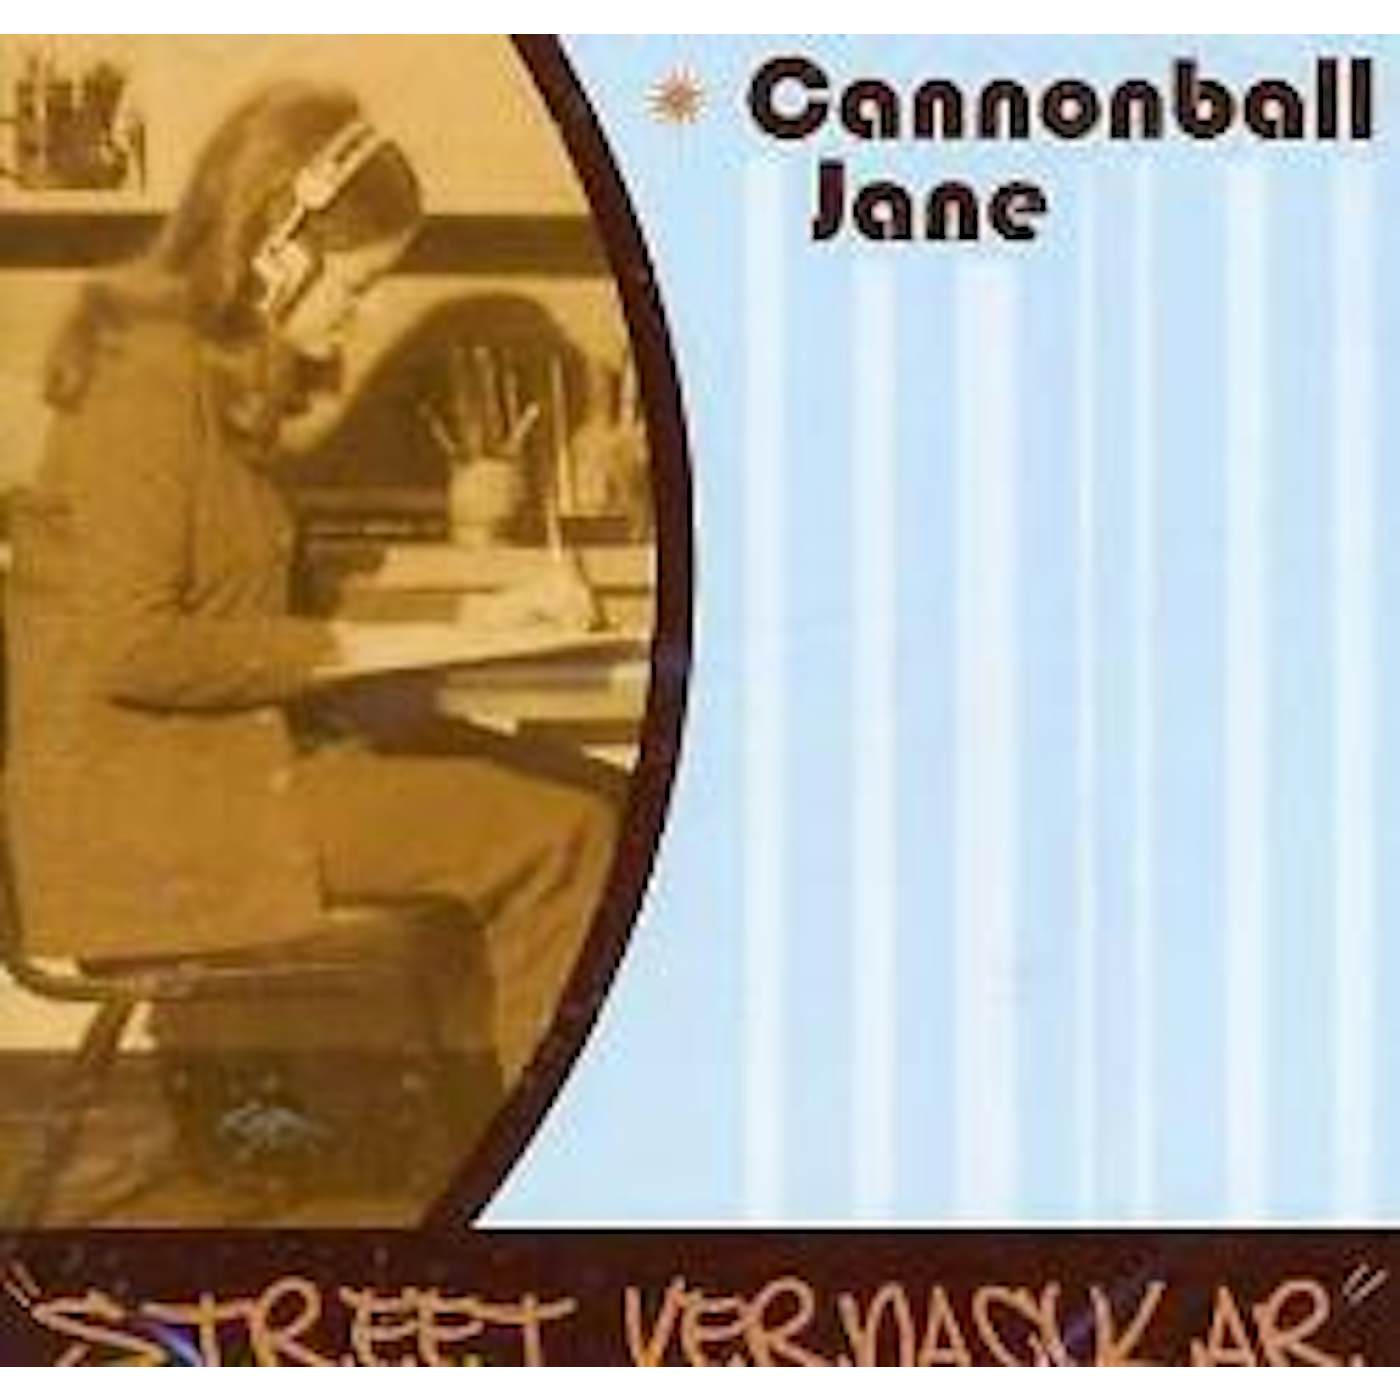 Cannonball Jane ‎'Street Vernacular'